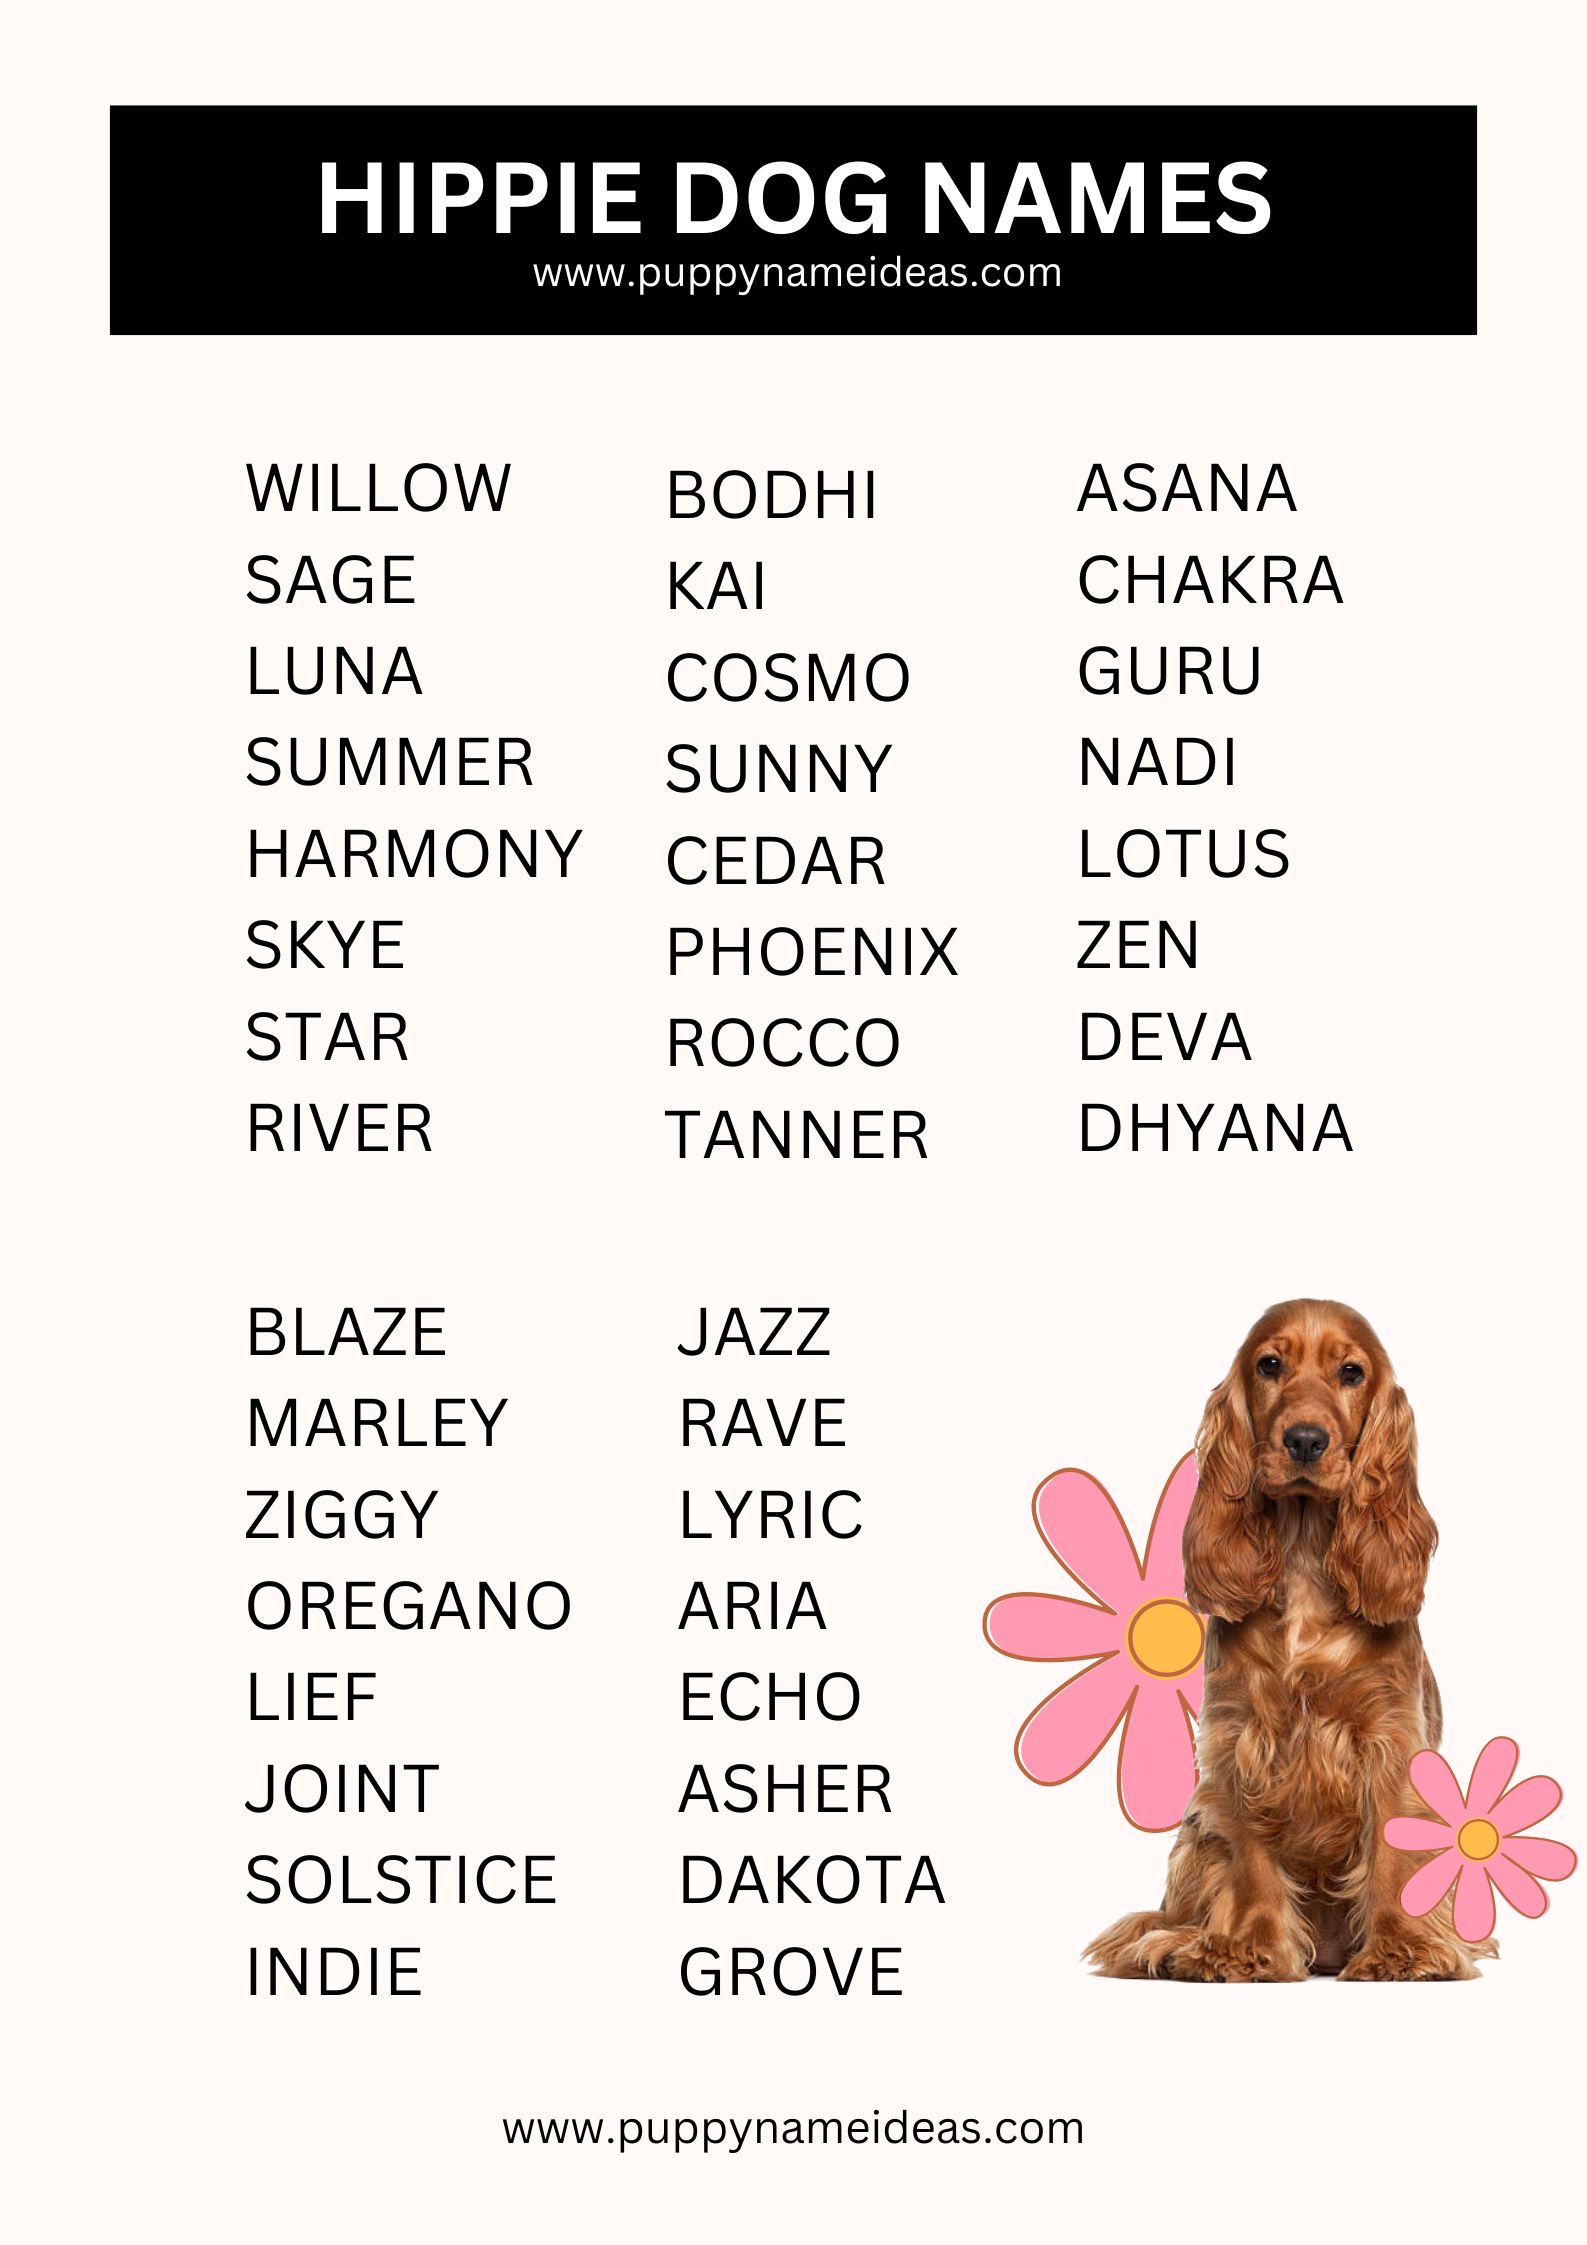 List Of Hippie Dog Names